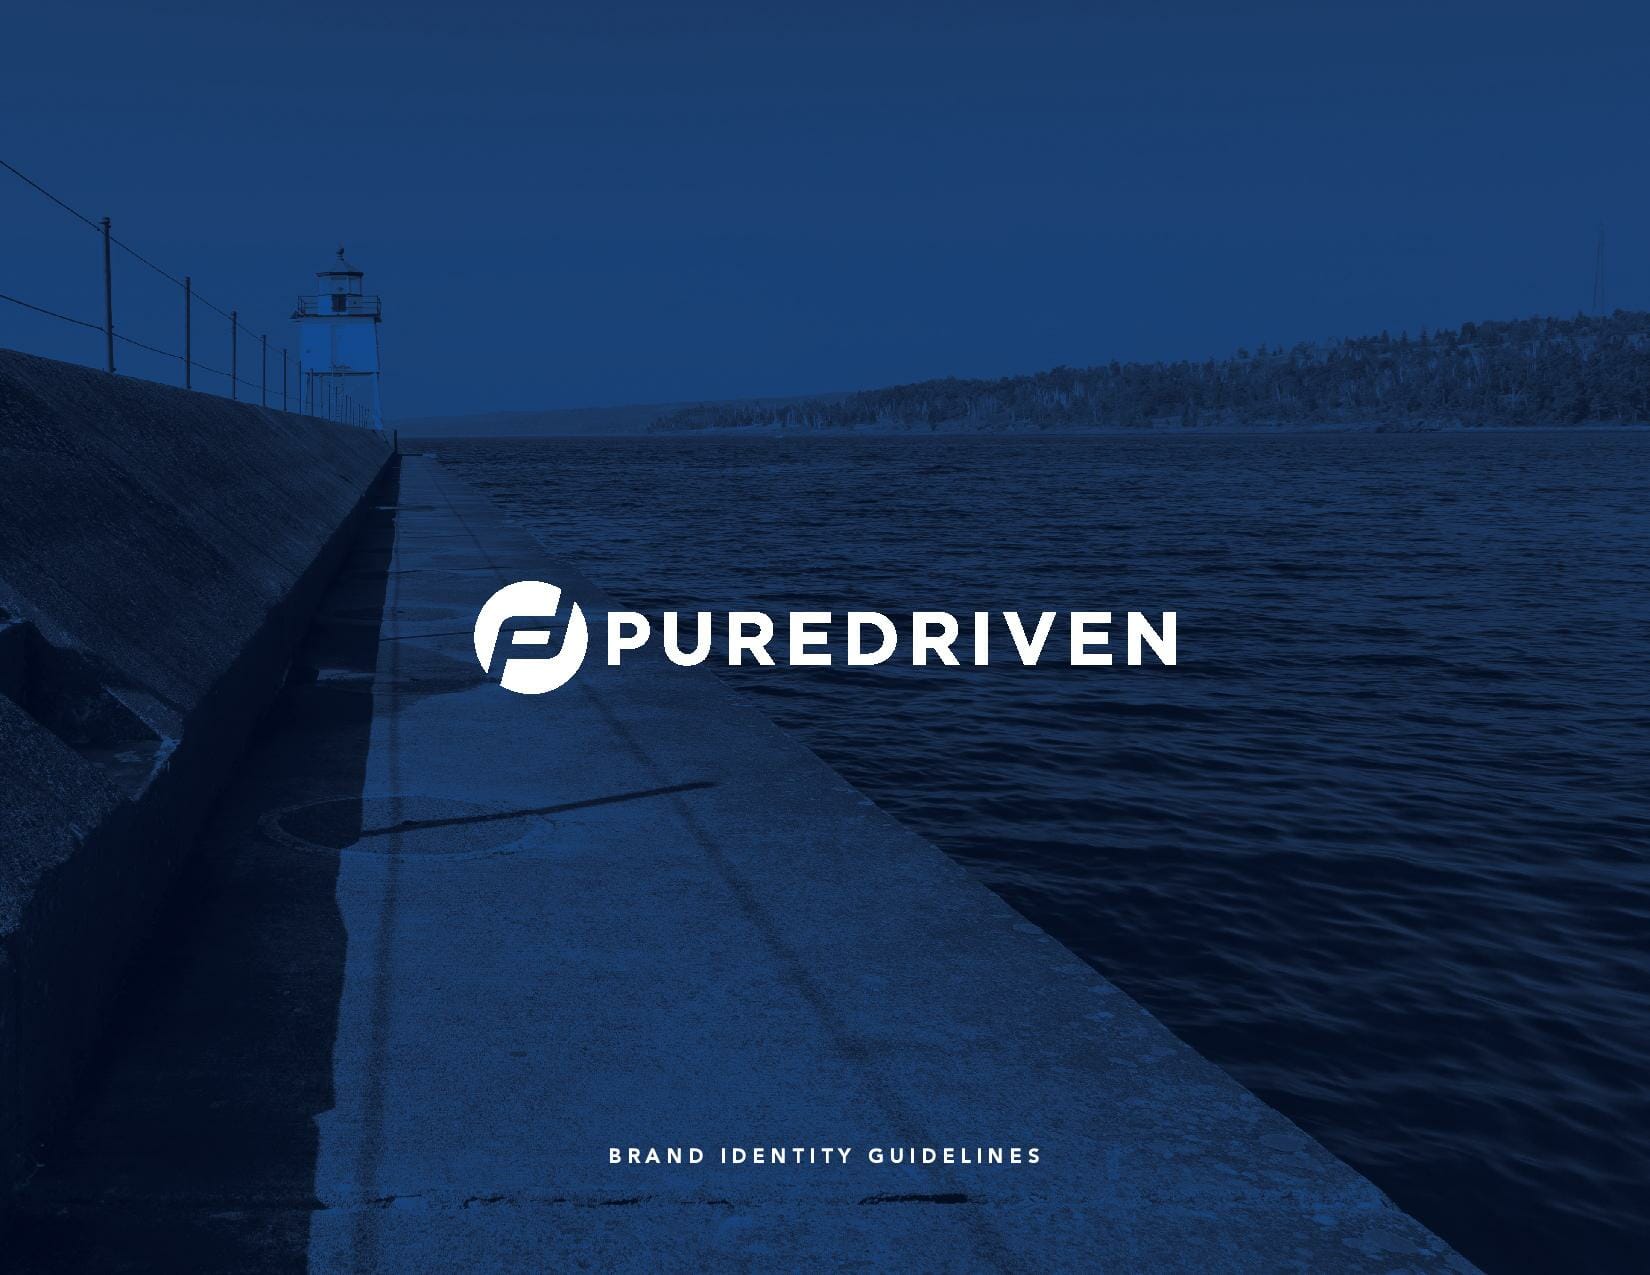 PureDriven Brand Identity Guidelines, created by Šek Design Studio